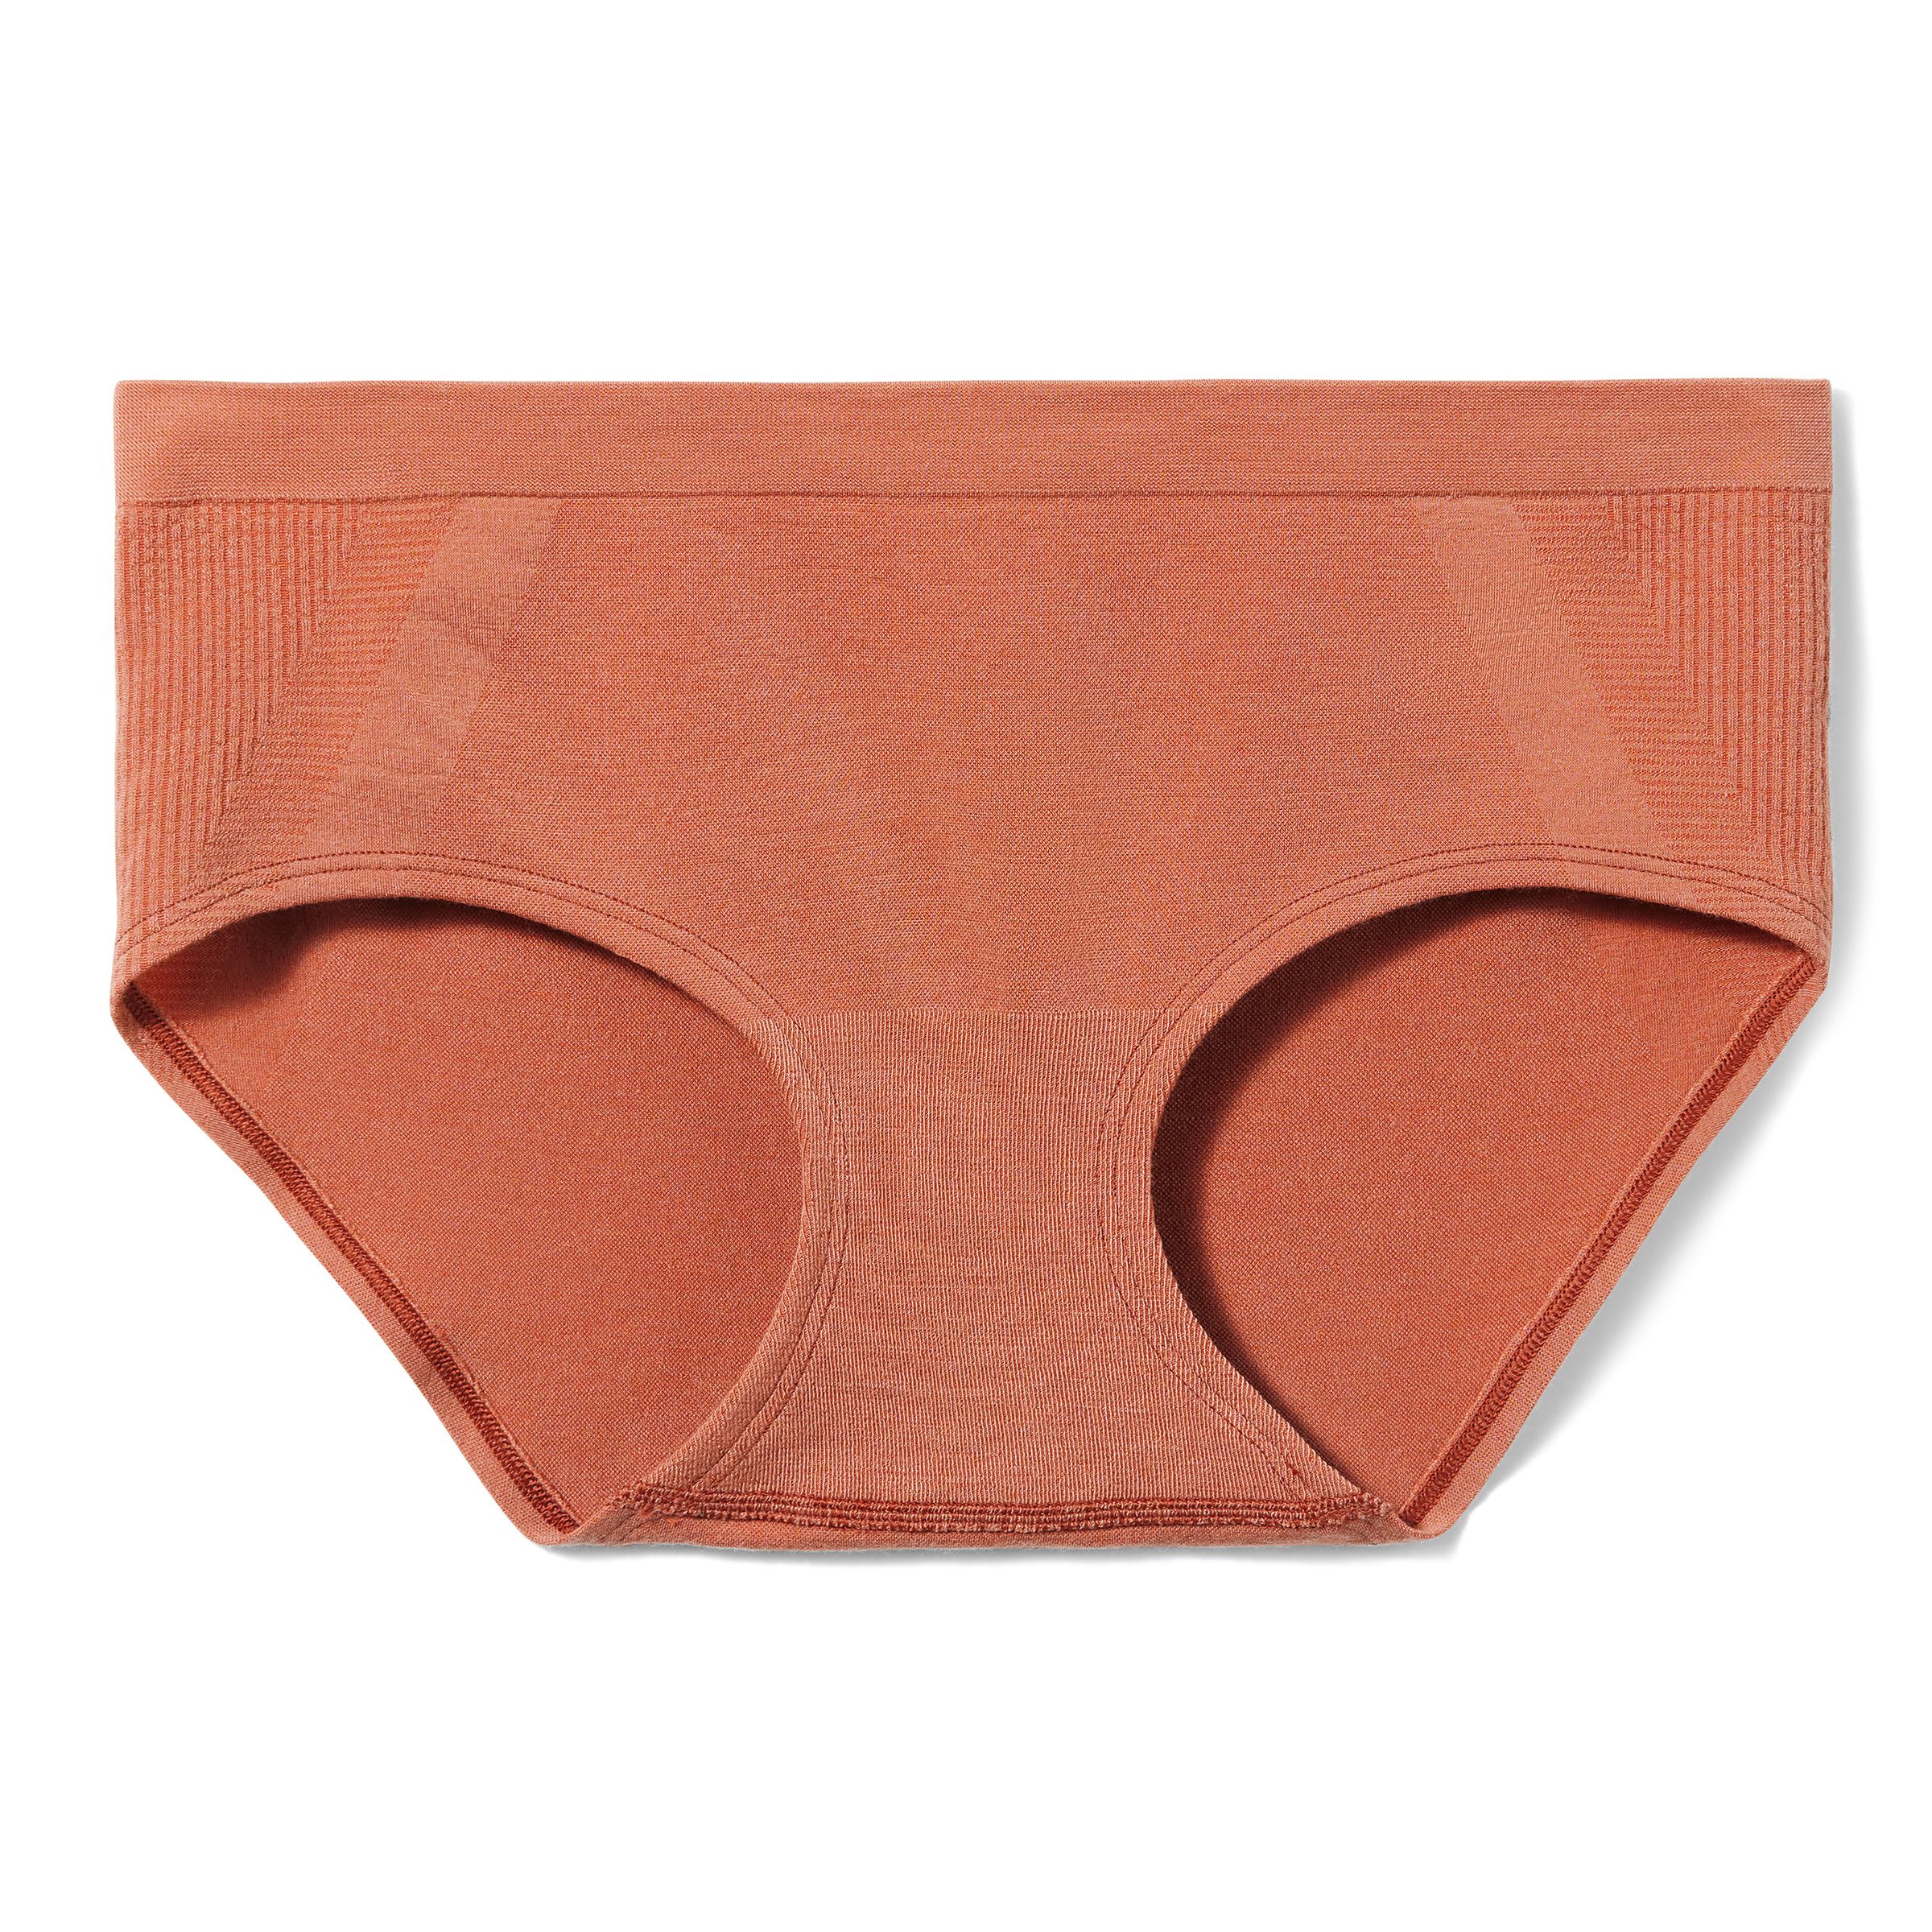 Ketyyh-chn99 Women Underwear Seamless Underwear V-Shape Panties for Ladies  Grey,M